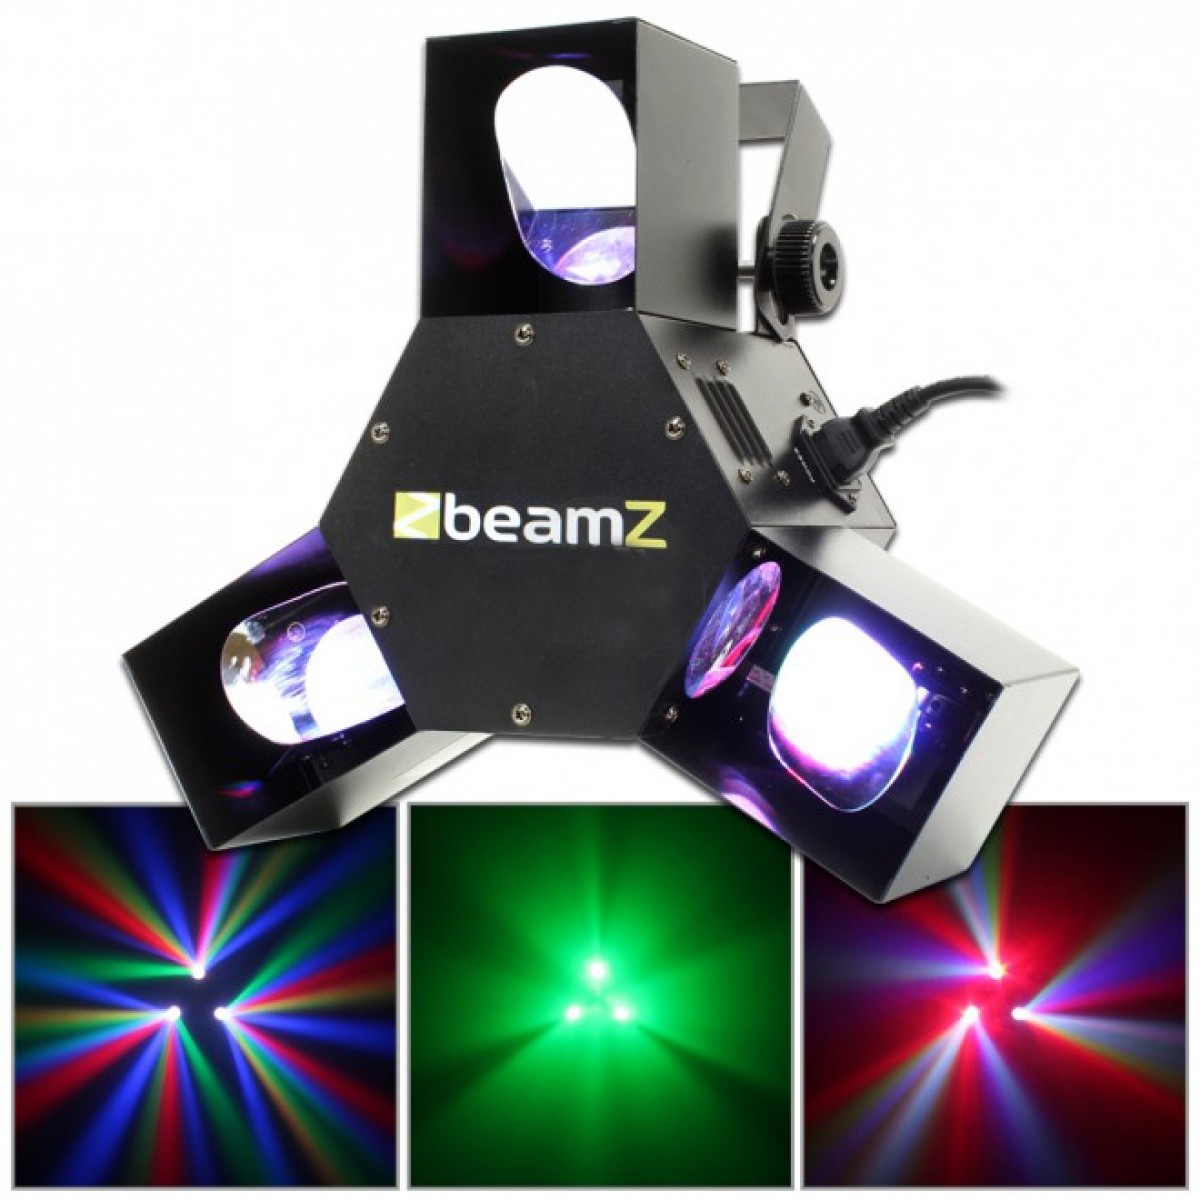 TRIPLE FLEX BEAMZ DJ LED DISCO LIGHTING FROM GRAVITY SOUND AND LIGHTING STORE DURBAN 0315072736